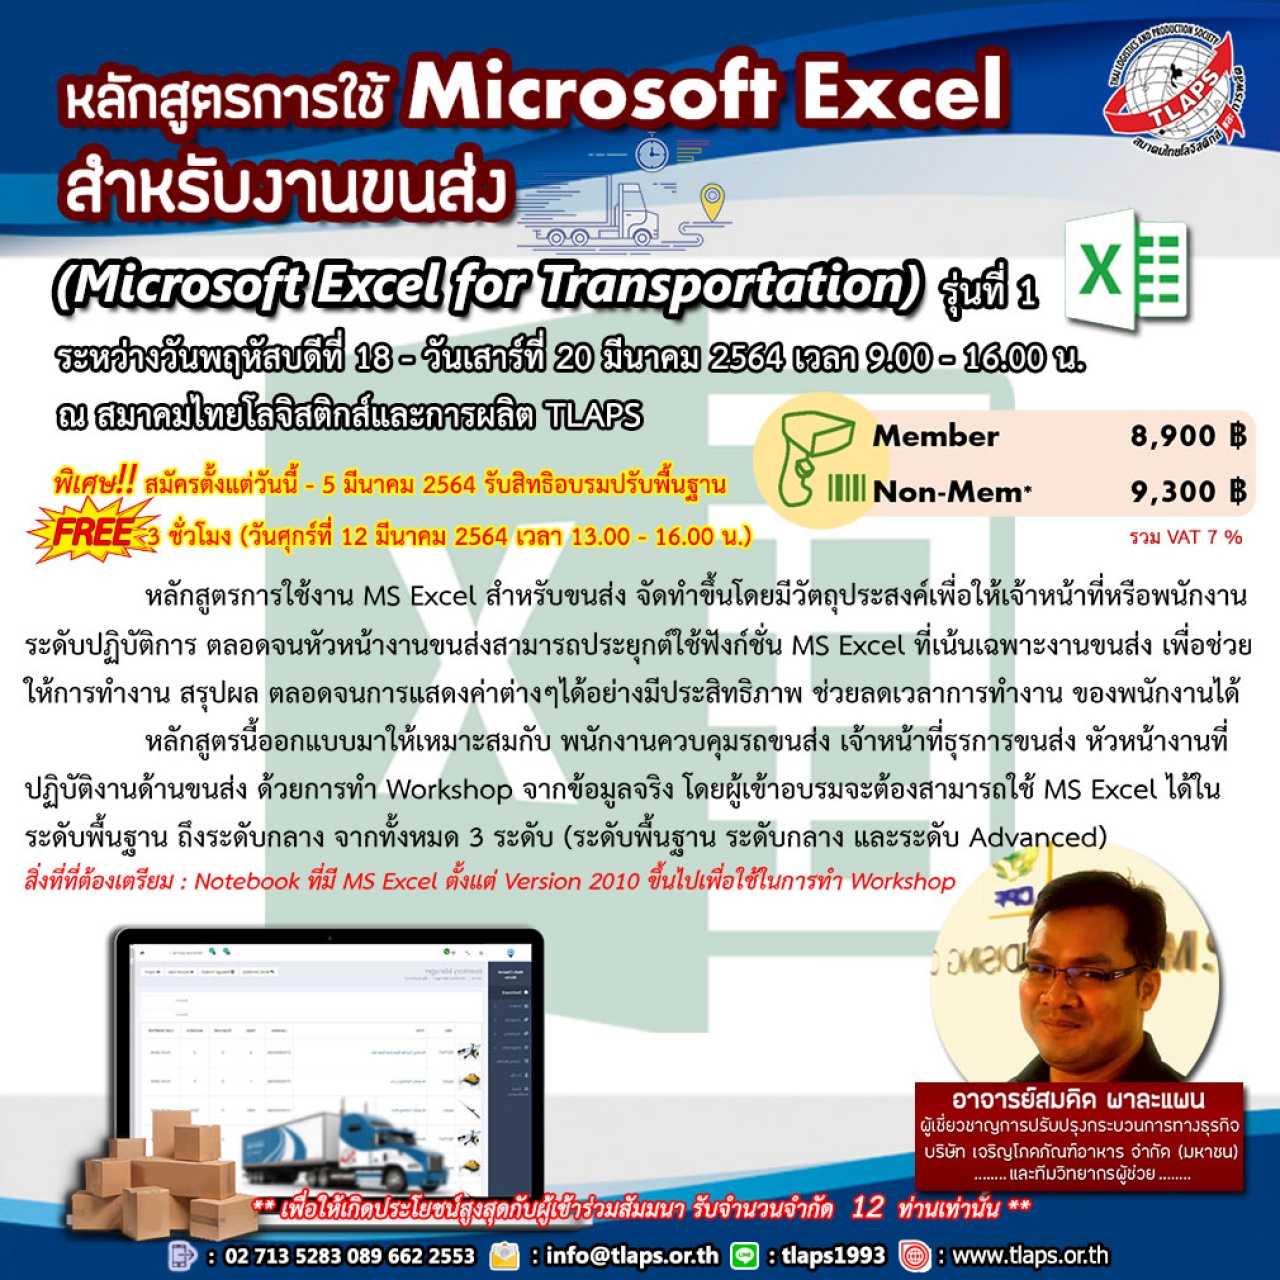 Microsoft Excel for Transportation หลักสูตรการใช้ Microsoft Excel สำหรับงานขนส่ง รุ่นที่ 1